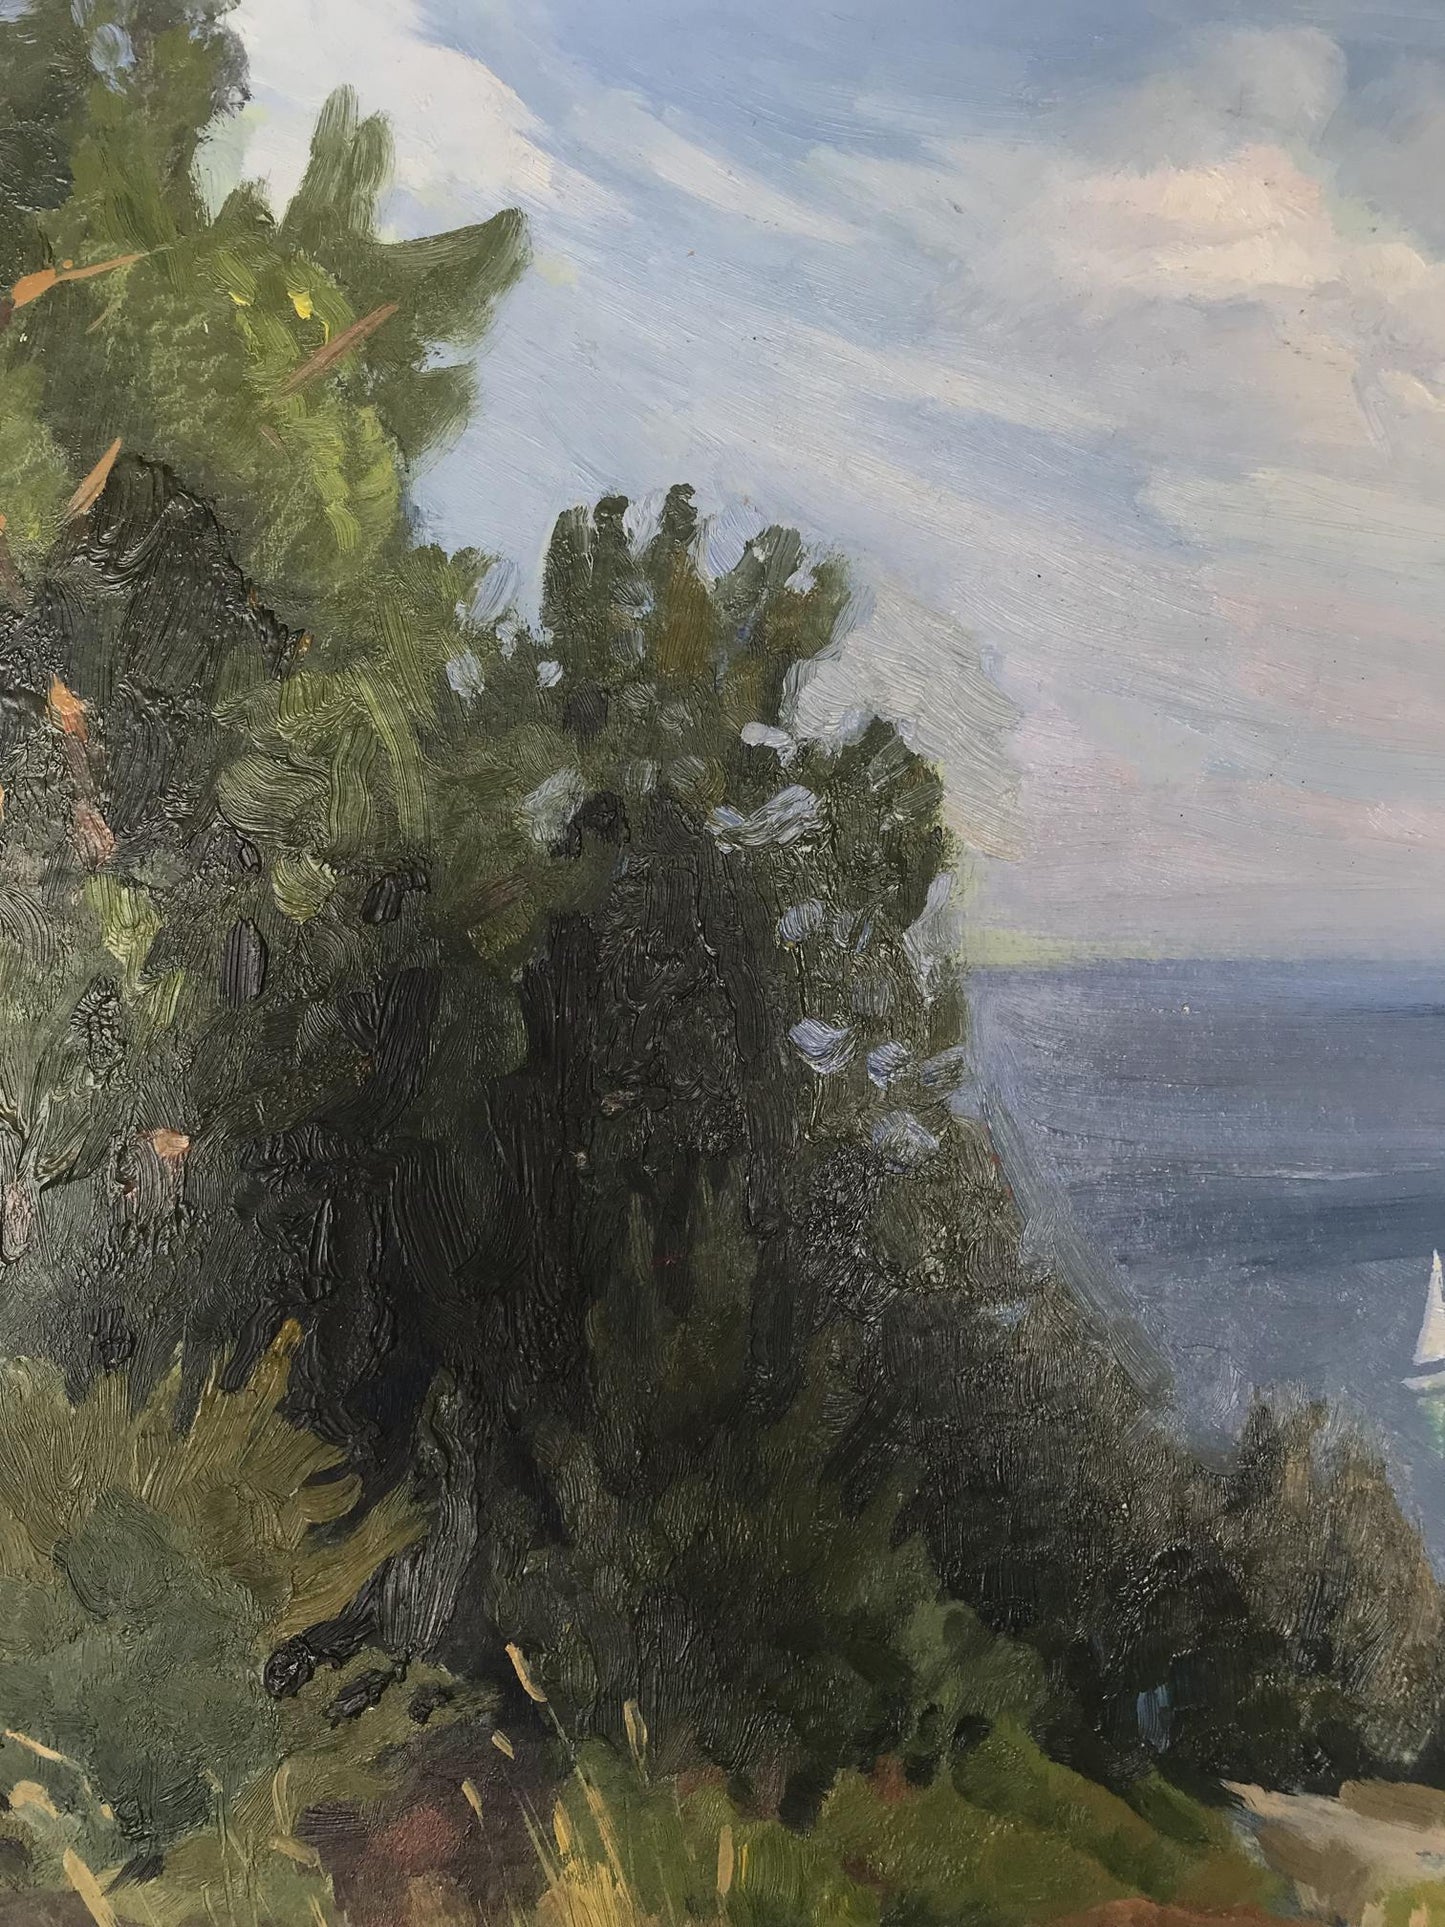 Oil painting "Near the Black Sea" by Batrakov, capturing seaside charm.